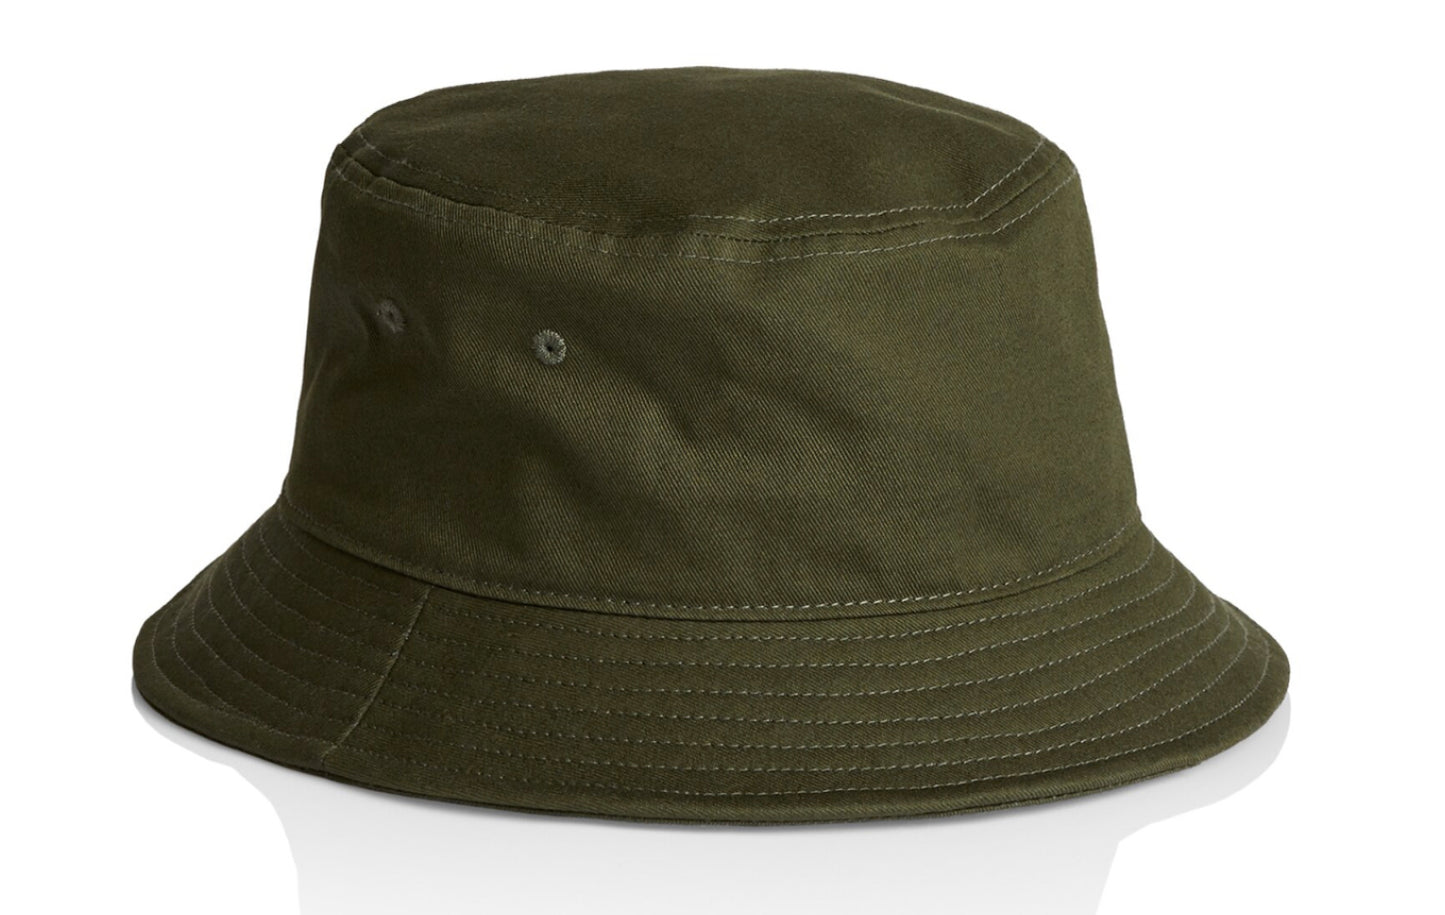 PINK/GREEN ILLUSIVE LOGO - HATS/CAPS - BEANIES - BUCKET HATS